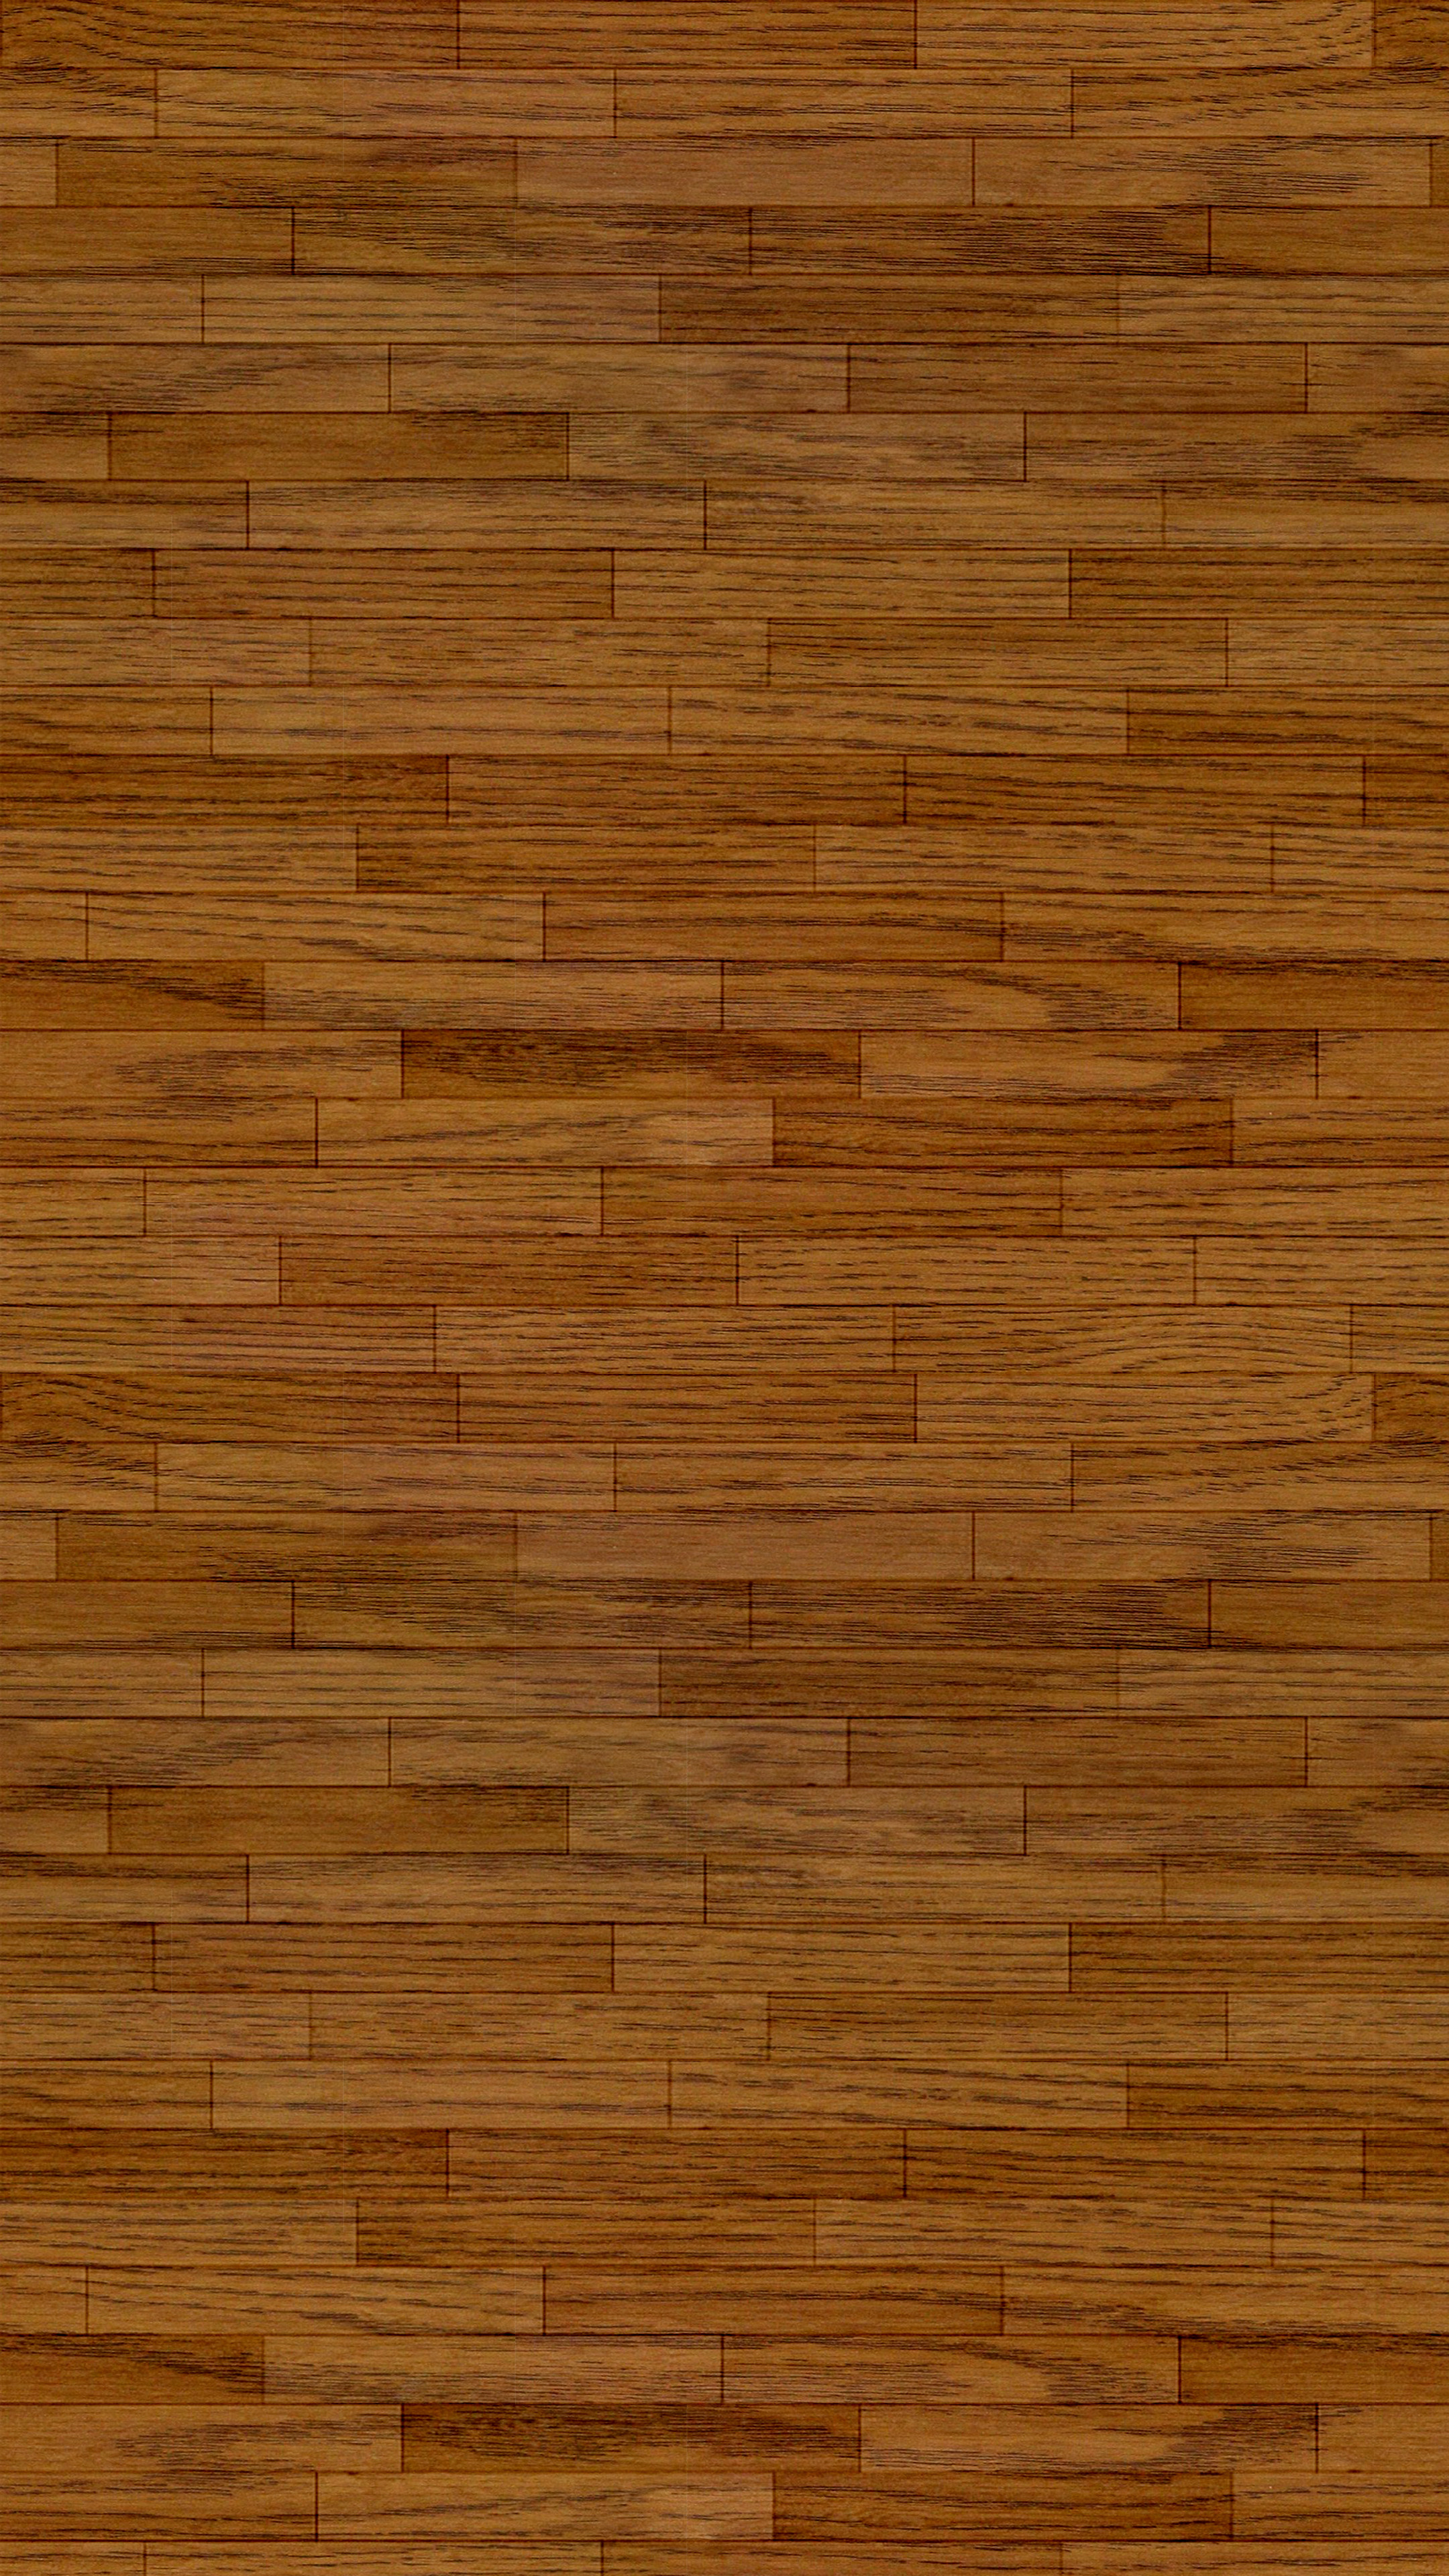 Hardwood floor pattern, Dark wood elegance, Timeless beauty, Natural authenticity, 2160x3840 4K Handy